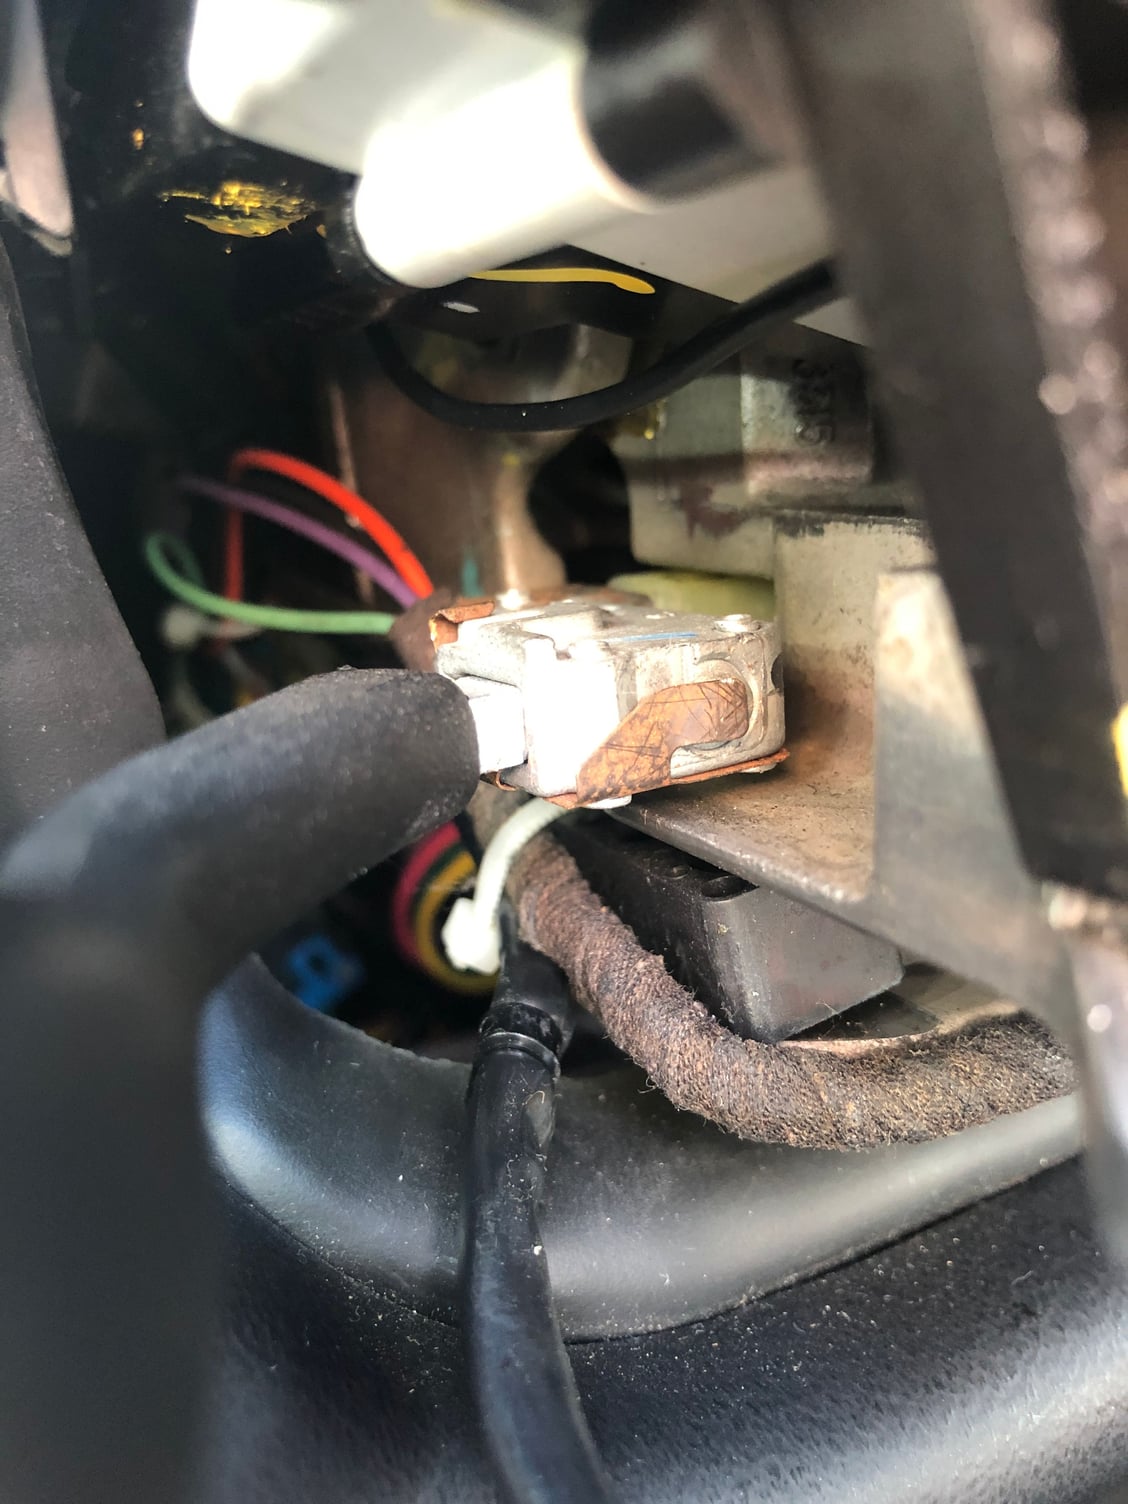 help with wiring issues - CorvetteForum - Chevrolet Corvette Forum